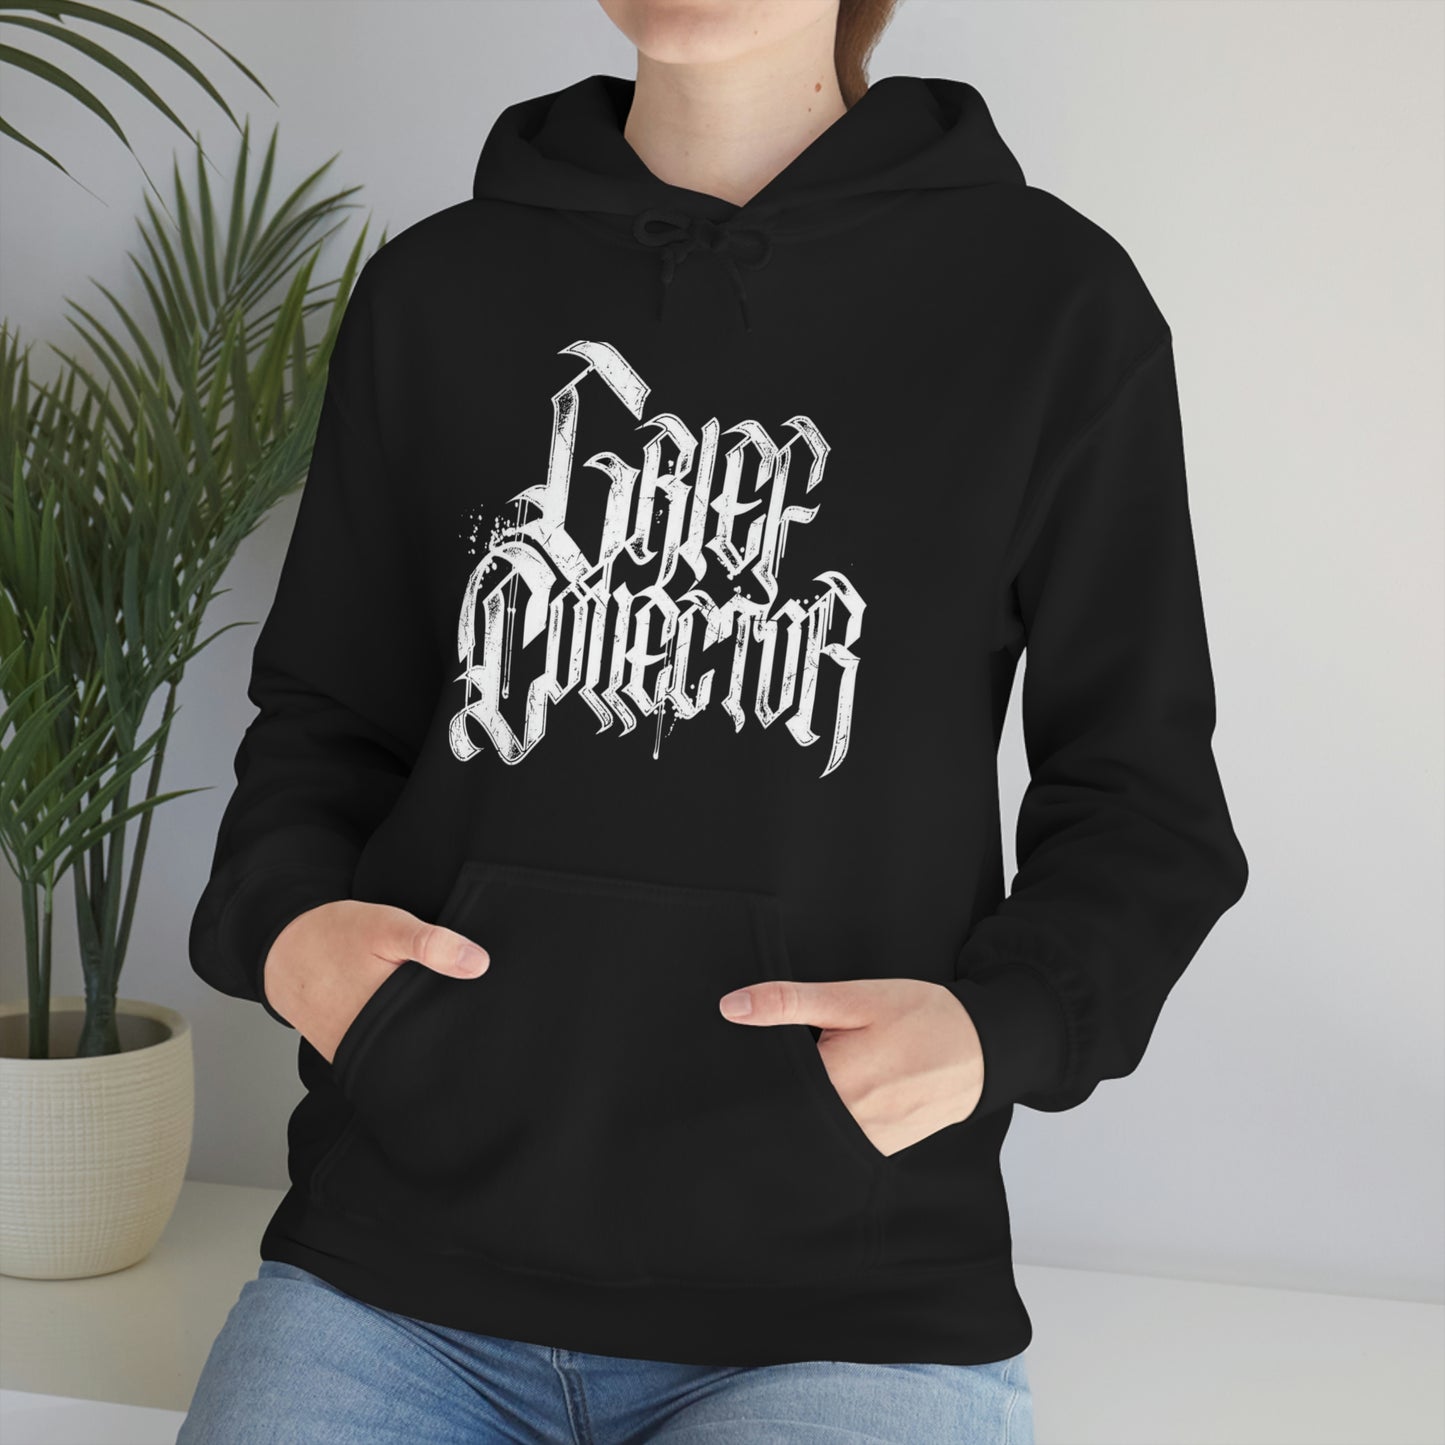 Grief Collector - In Times of Woe Hooded Sweatshirt (Europe)